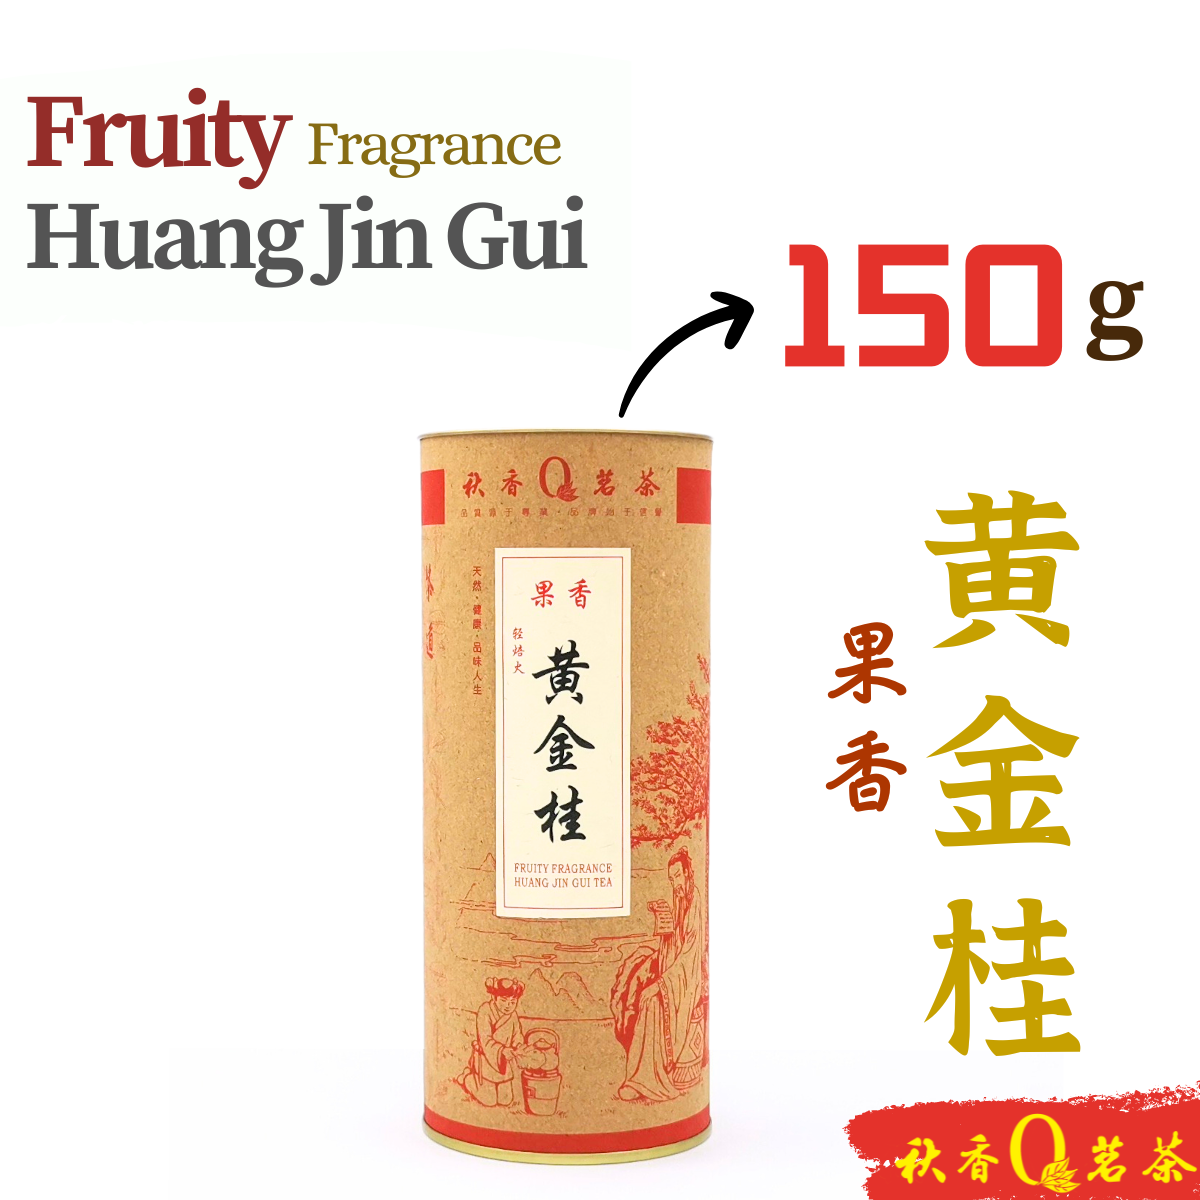 果香黄金桂 Fruity Fragrance Huang Jin Gui tea (轻焙火 Lightly Roasted) 【150g】|【黄金桂 Huang Jin Gui】